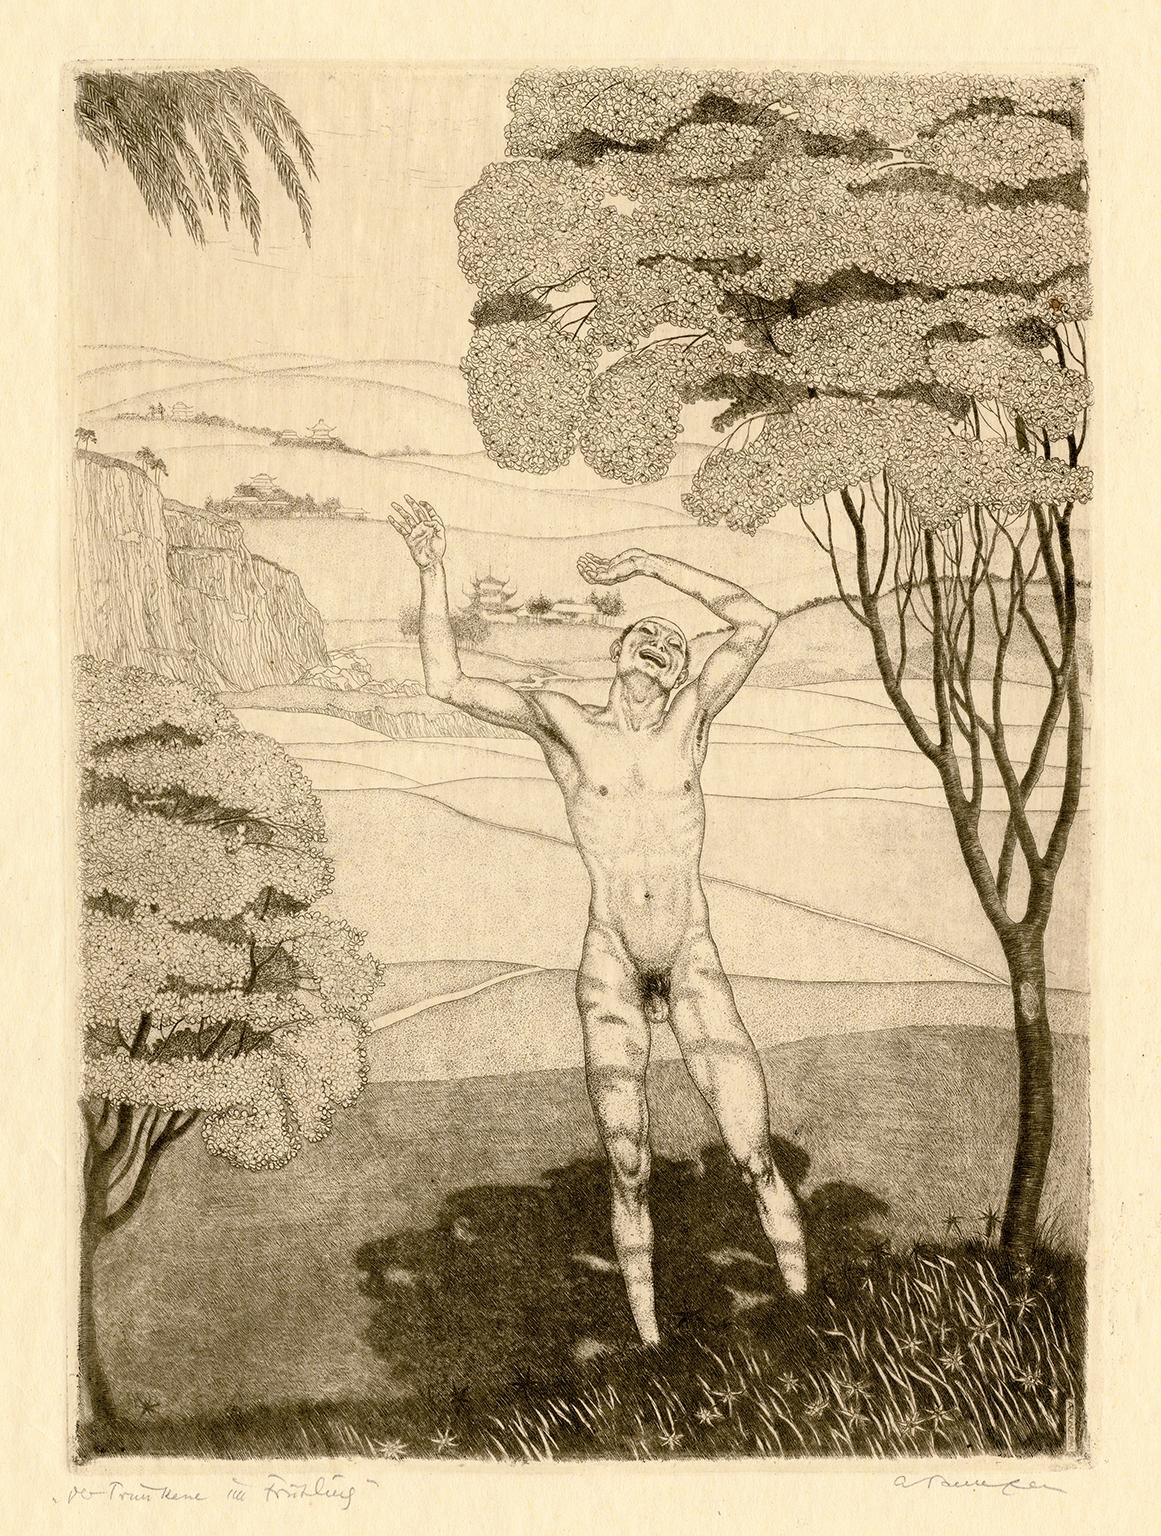 Arthur Paunzen Figurative Print - The Drunkard in Spring —after Gustav Mahler's 'The Song of the Earth'